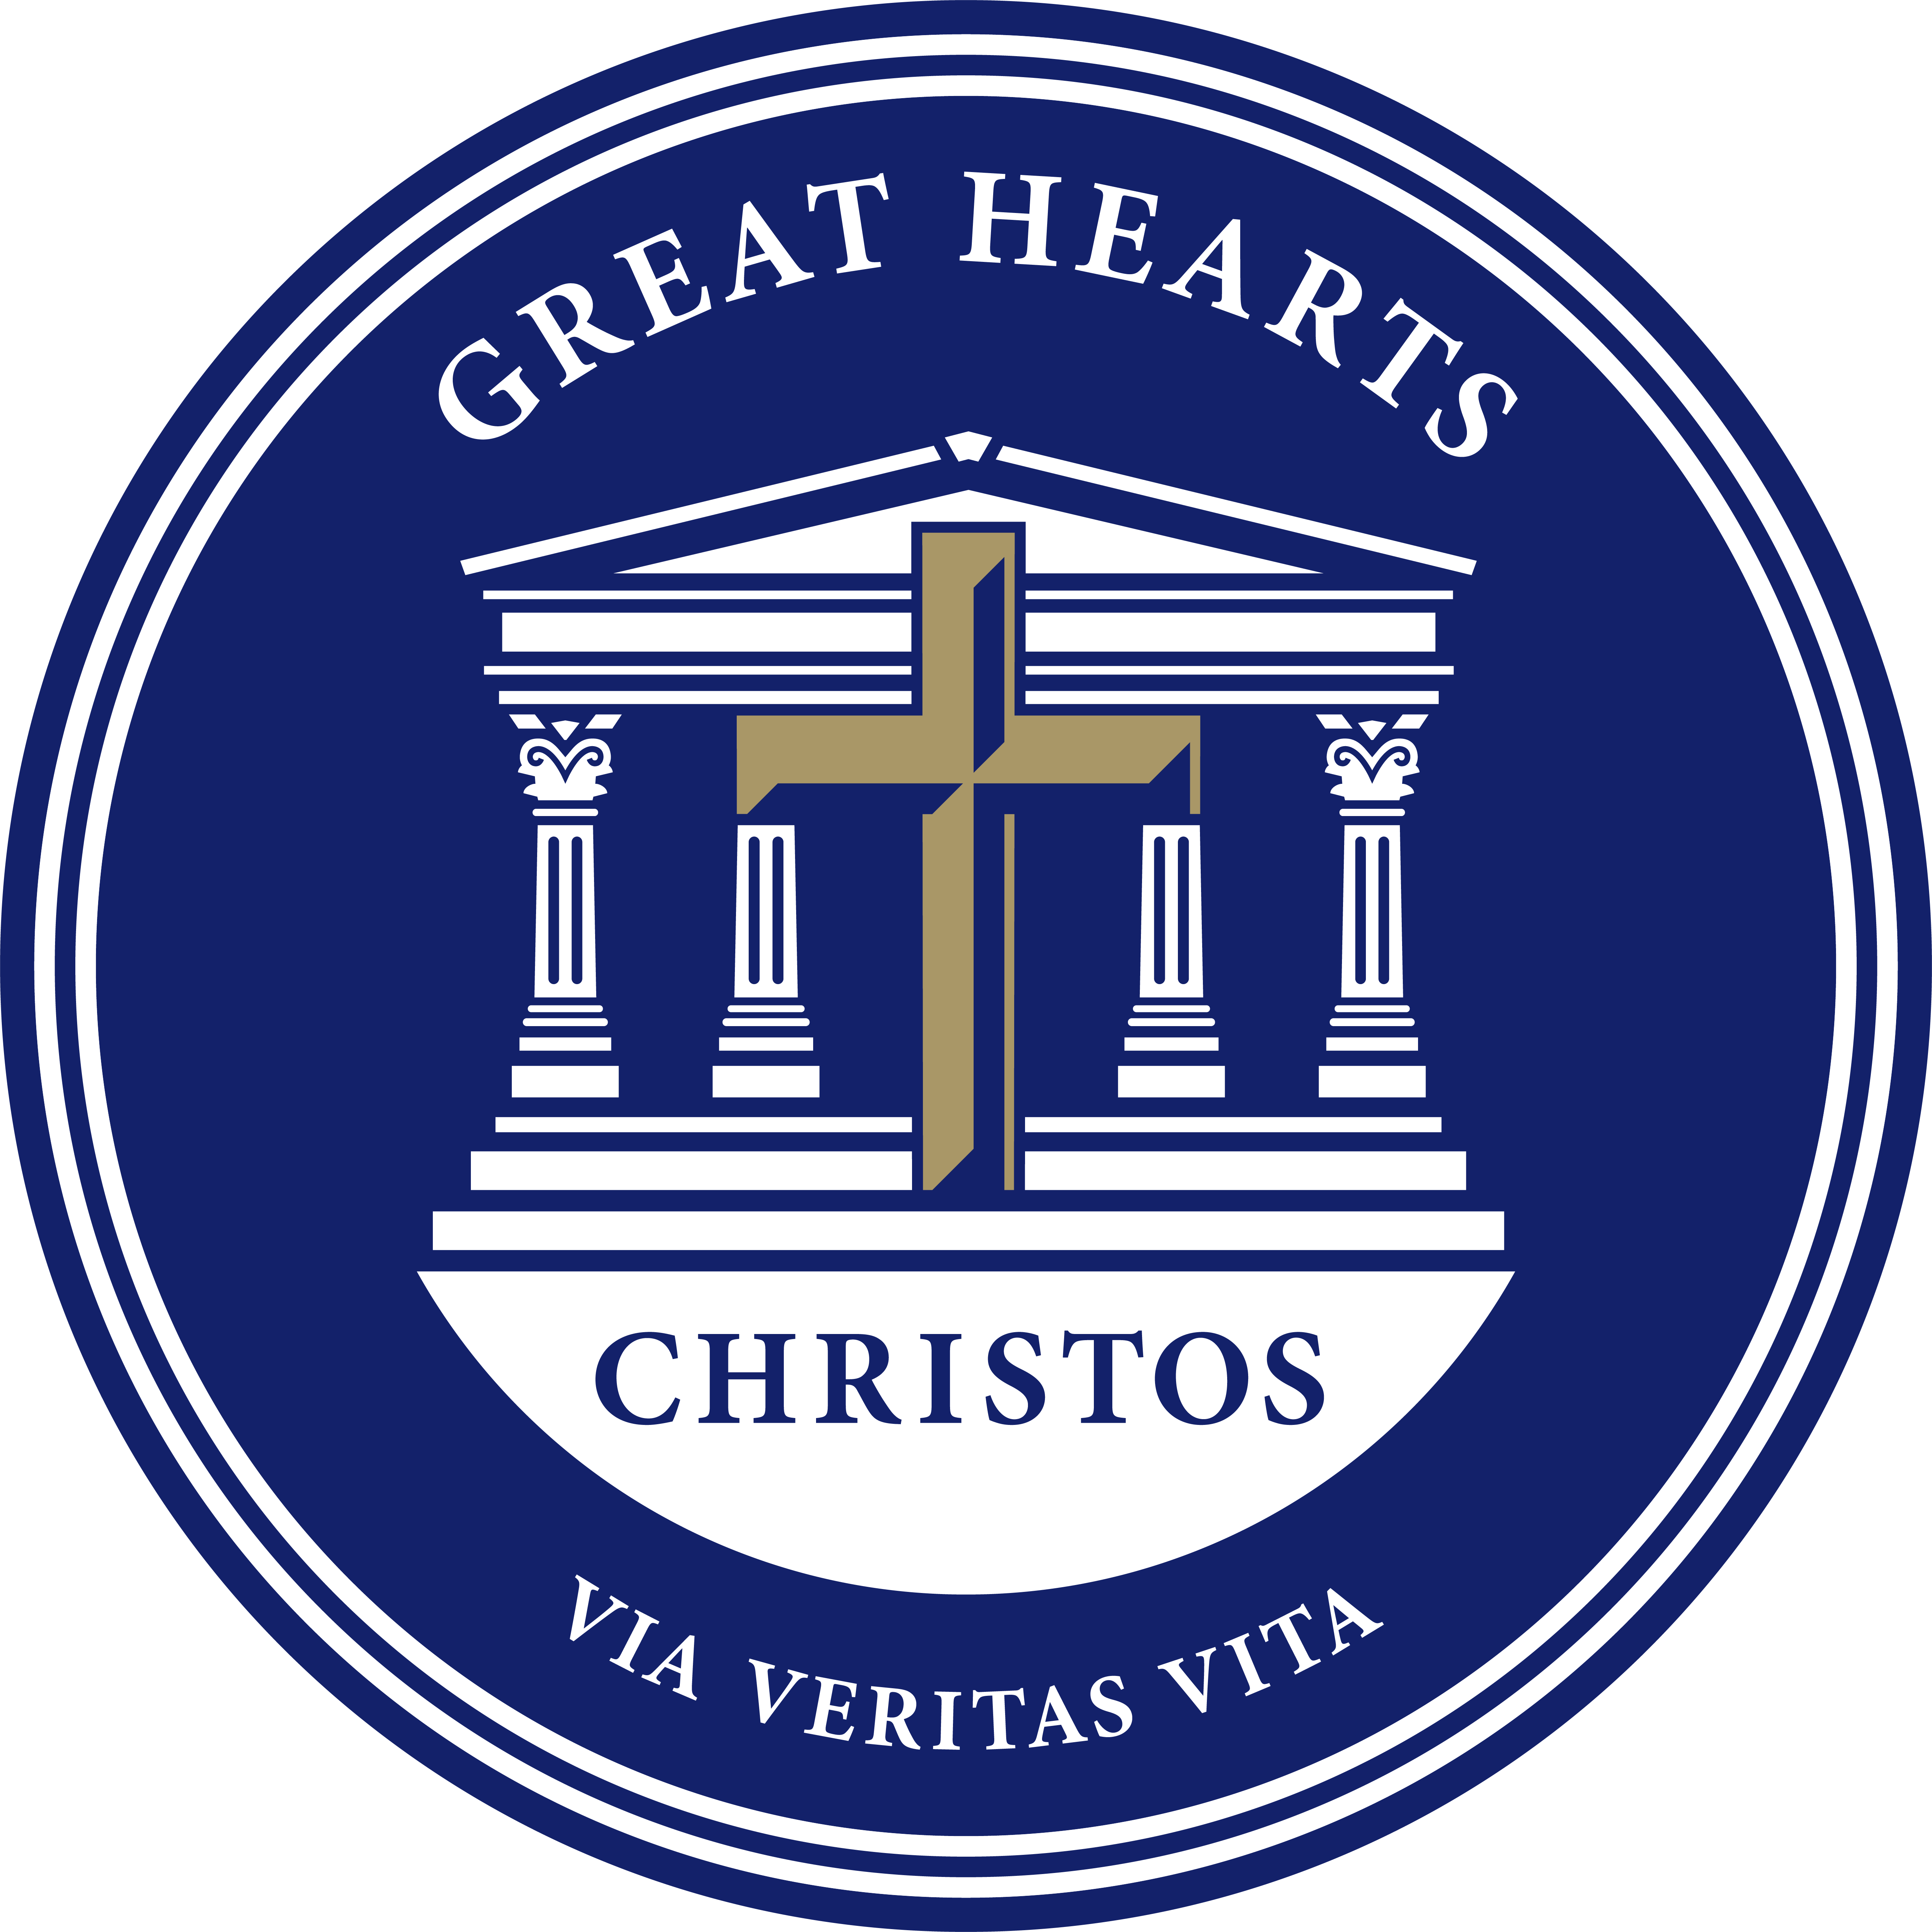 Enroll at Great Hearts Christos School Crest